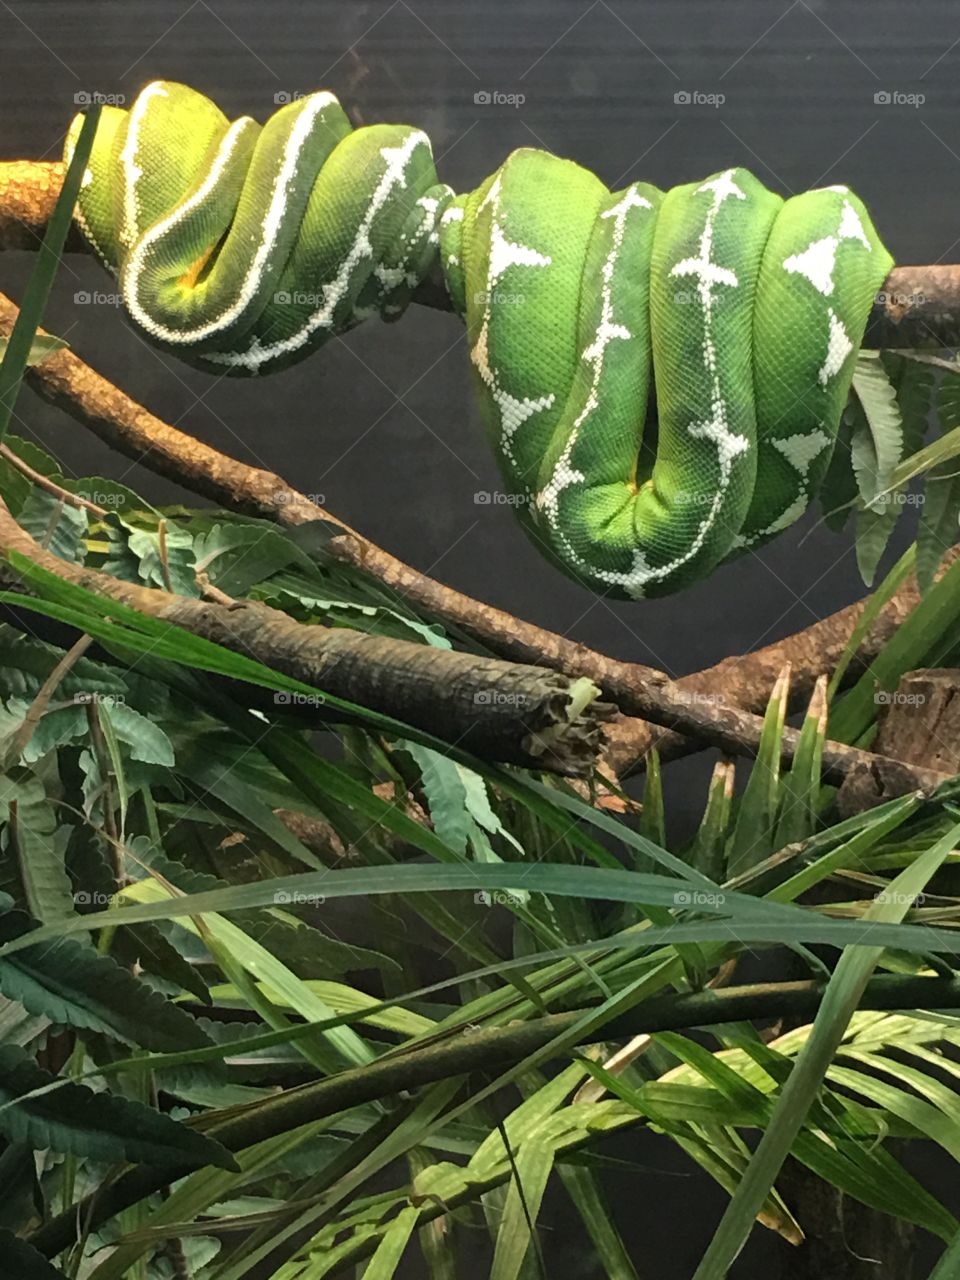 Emerald Boa at Zoo Atlanta 